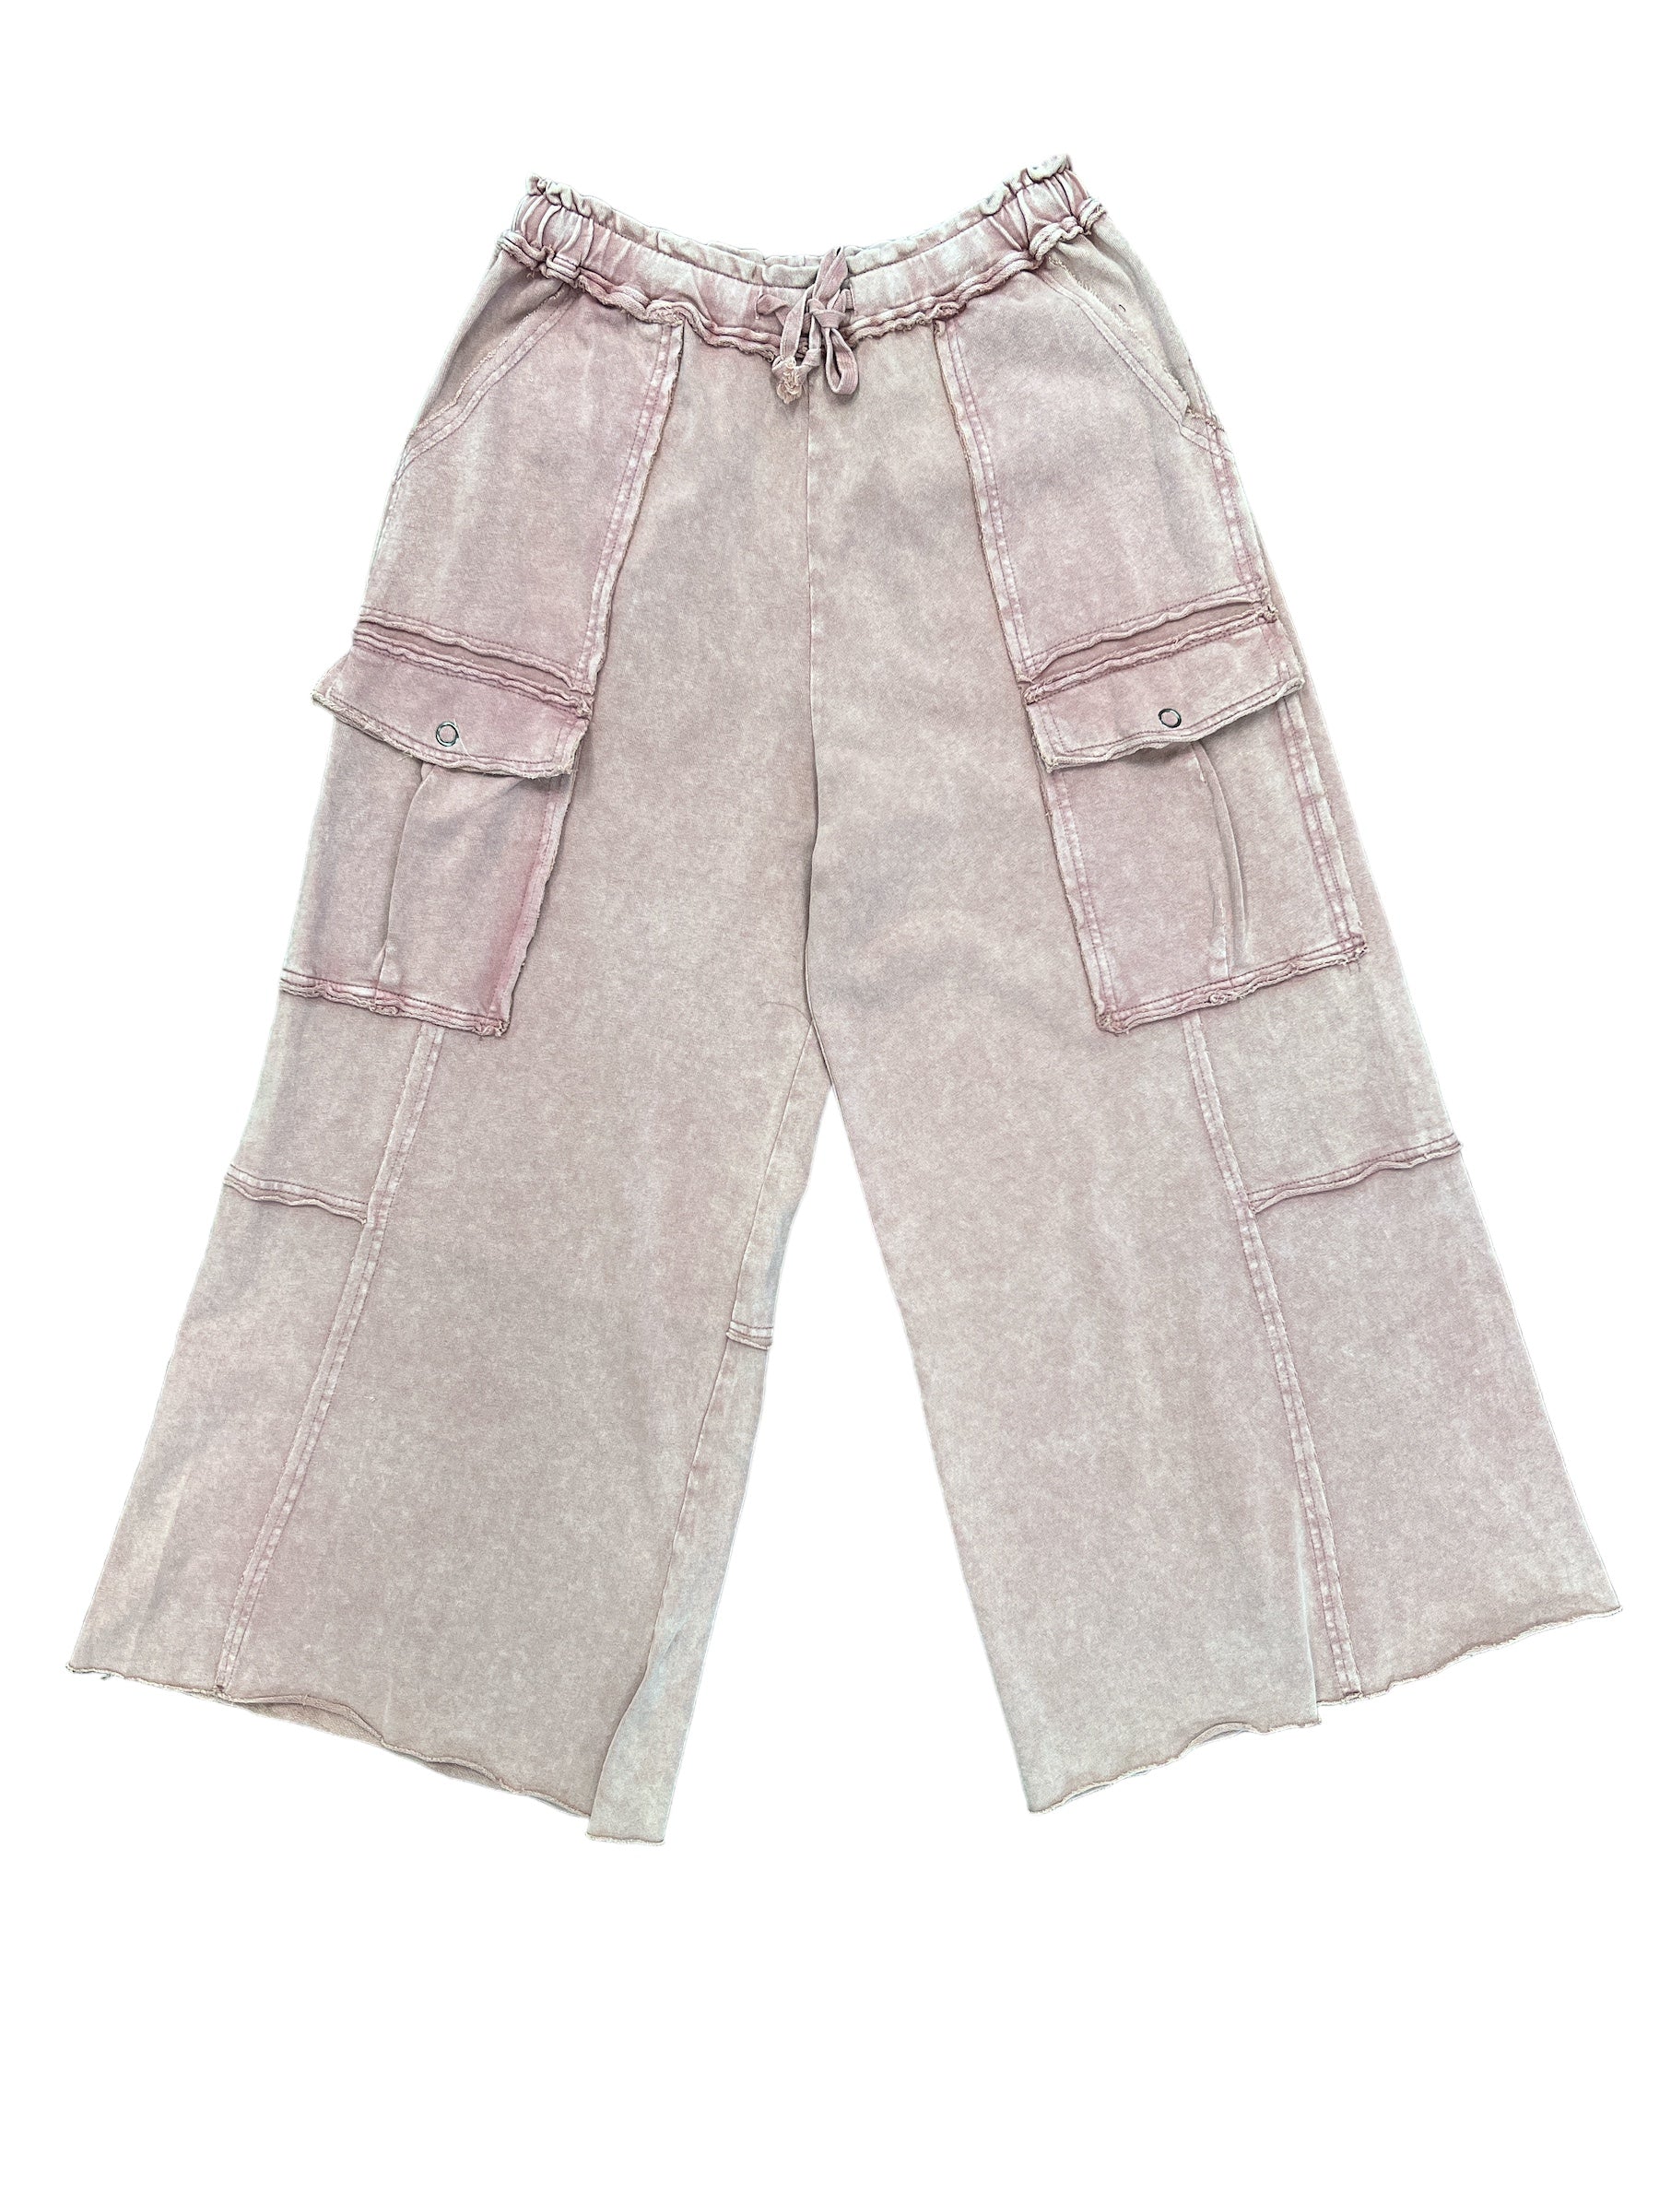 Jonny Wide Leg Pant-230 Pants-Simply Stylish Boutique-Simply Stylish Boutique | Women’s & Kid’s Fashion | Paducah, KY